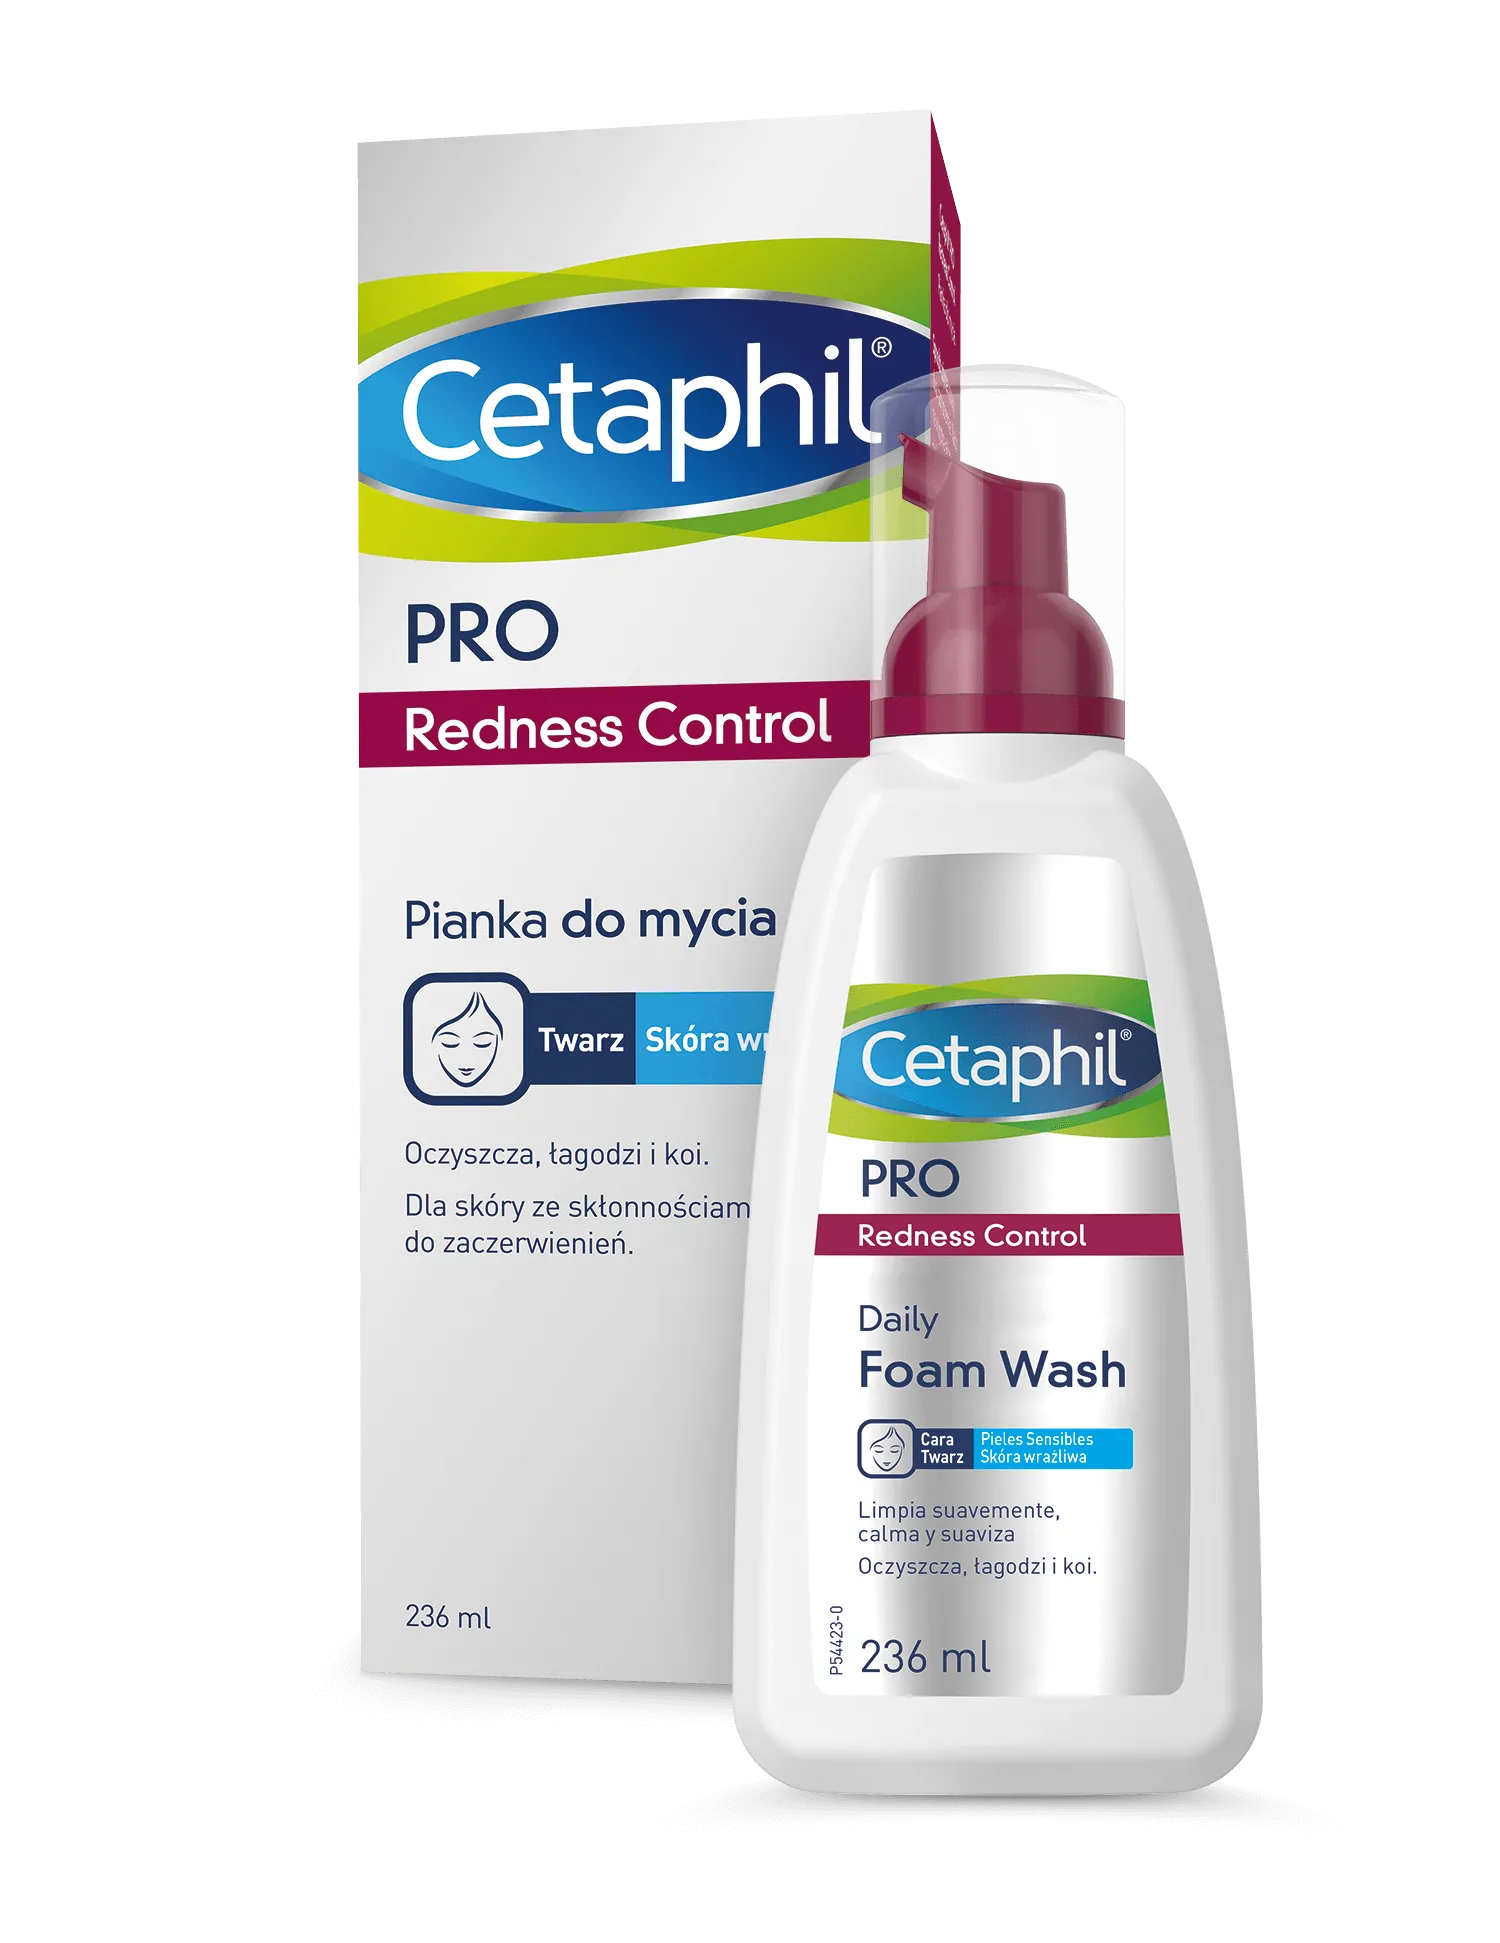 Cetaphil Pro Redness Control, pianka do mycia, 236 ml